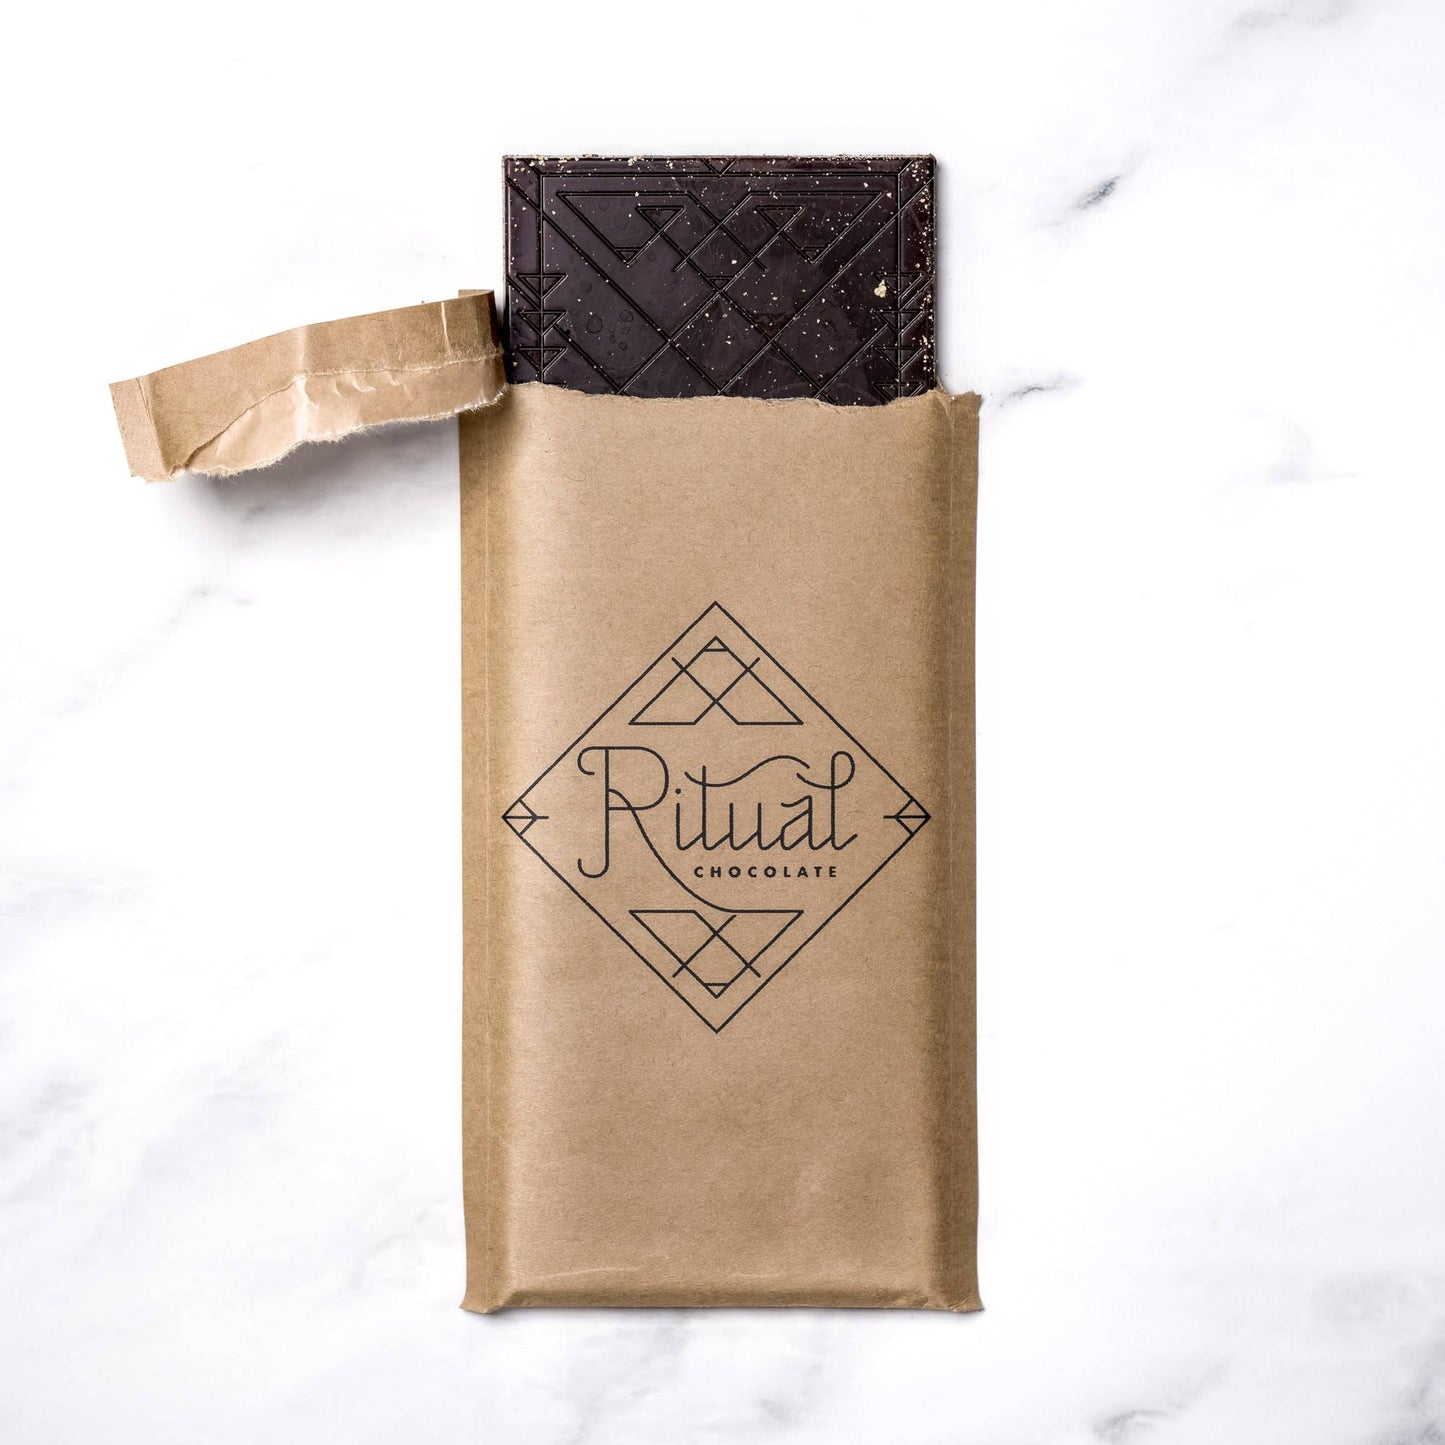 Ritual Chocolate - S’mores Bar, 70% Cacao